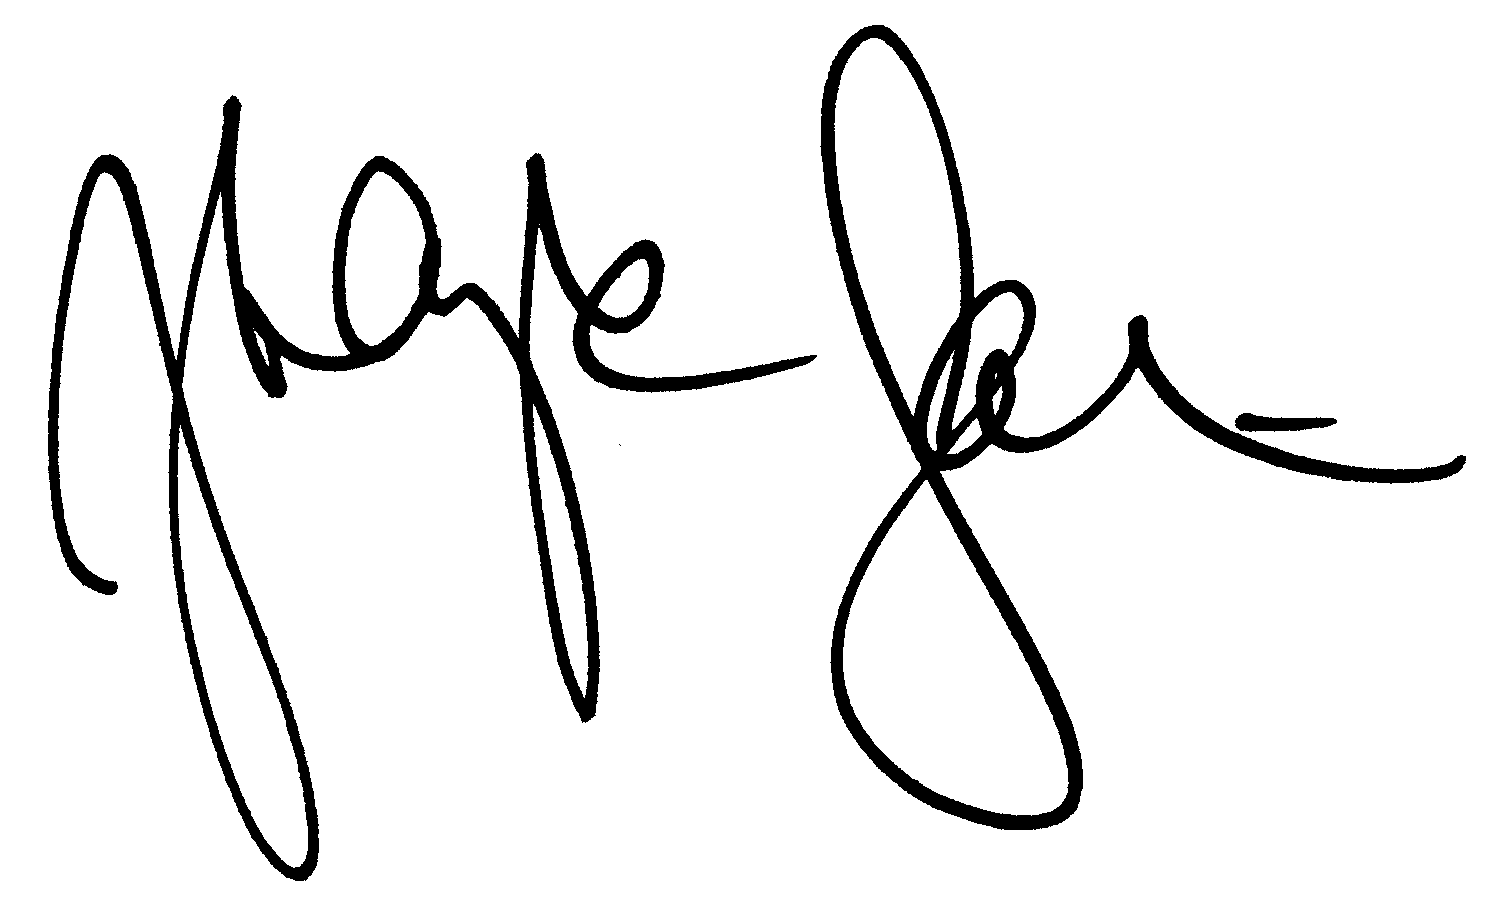 Zsa Zsa Gabor autograph facsimile